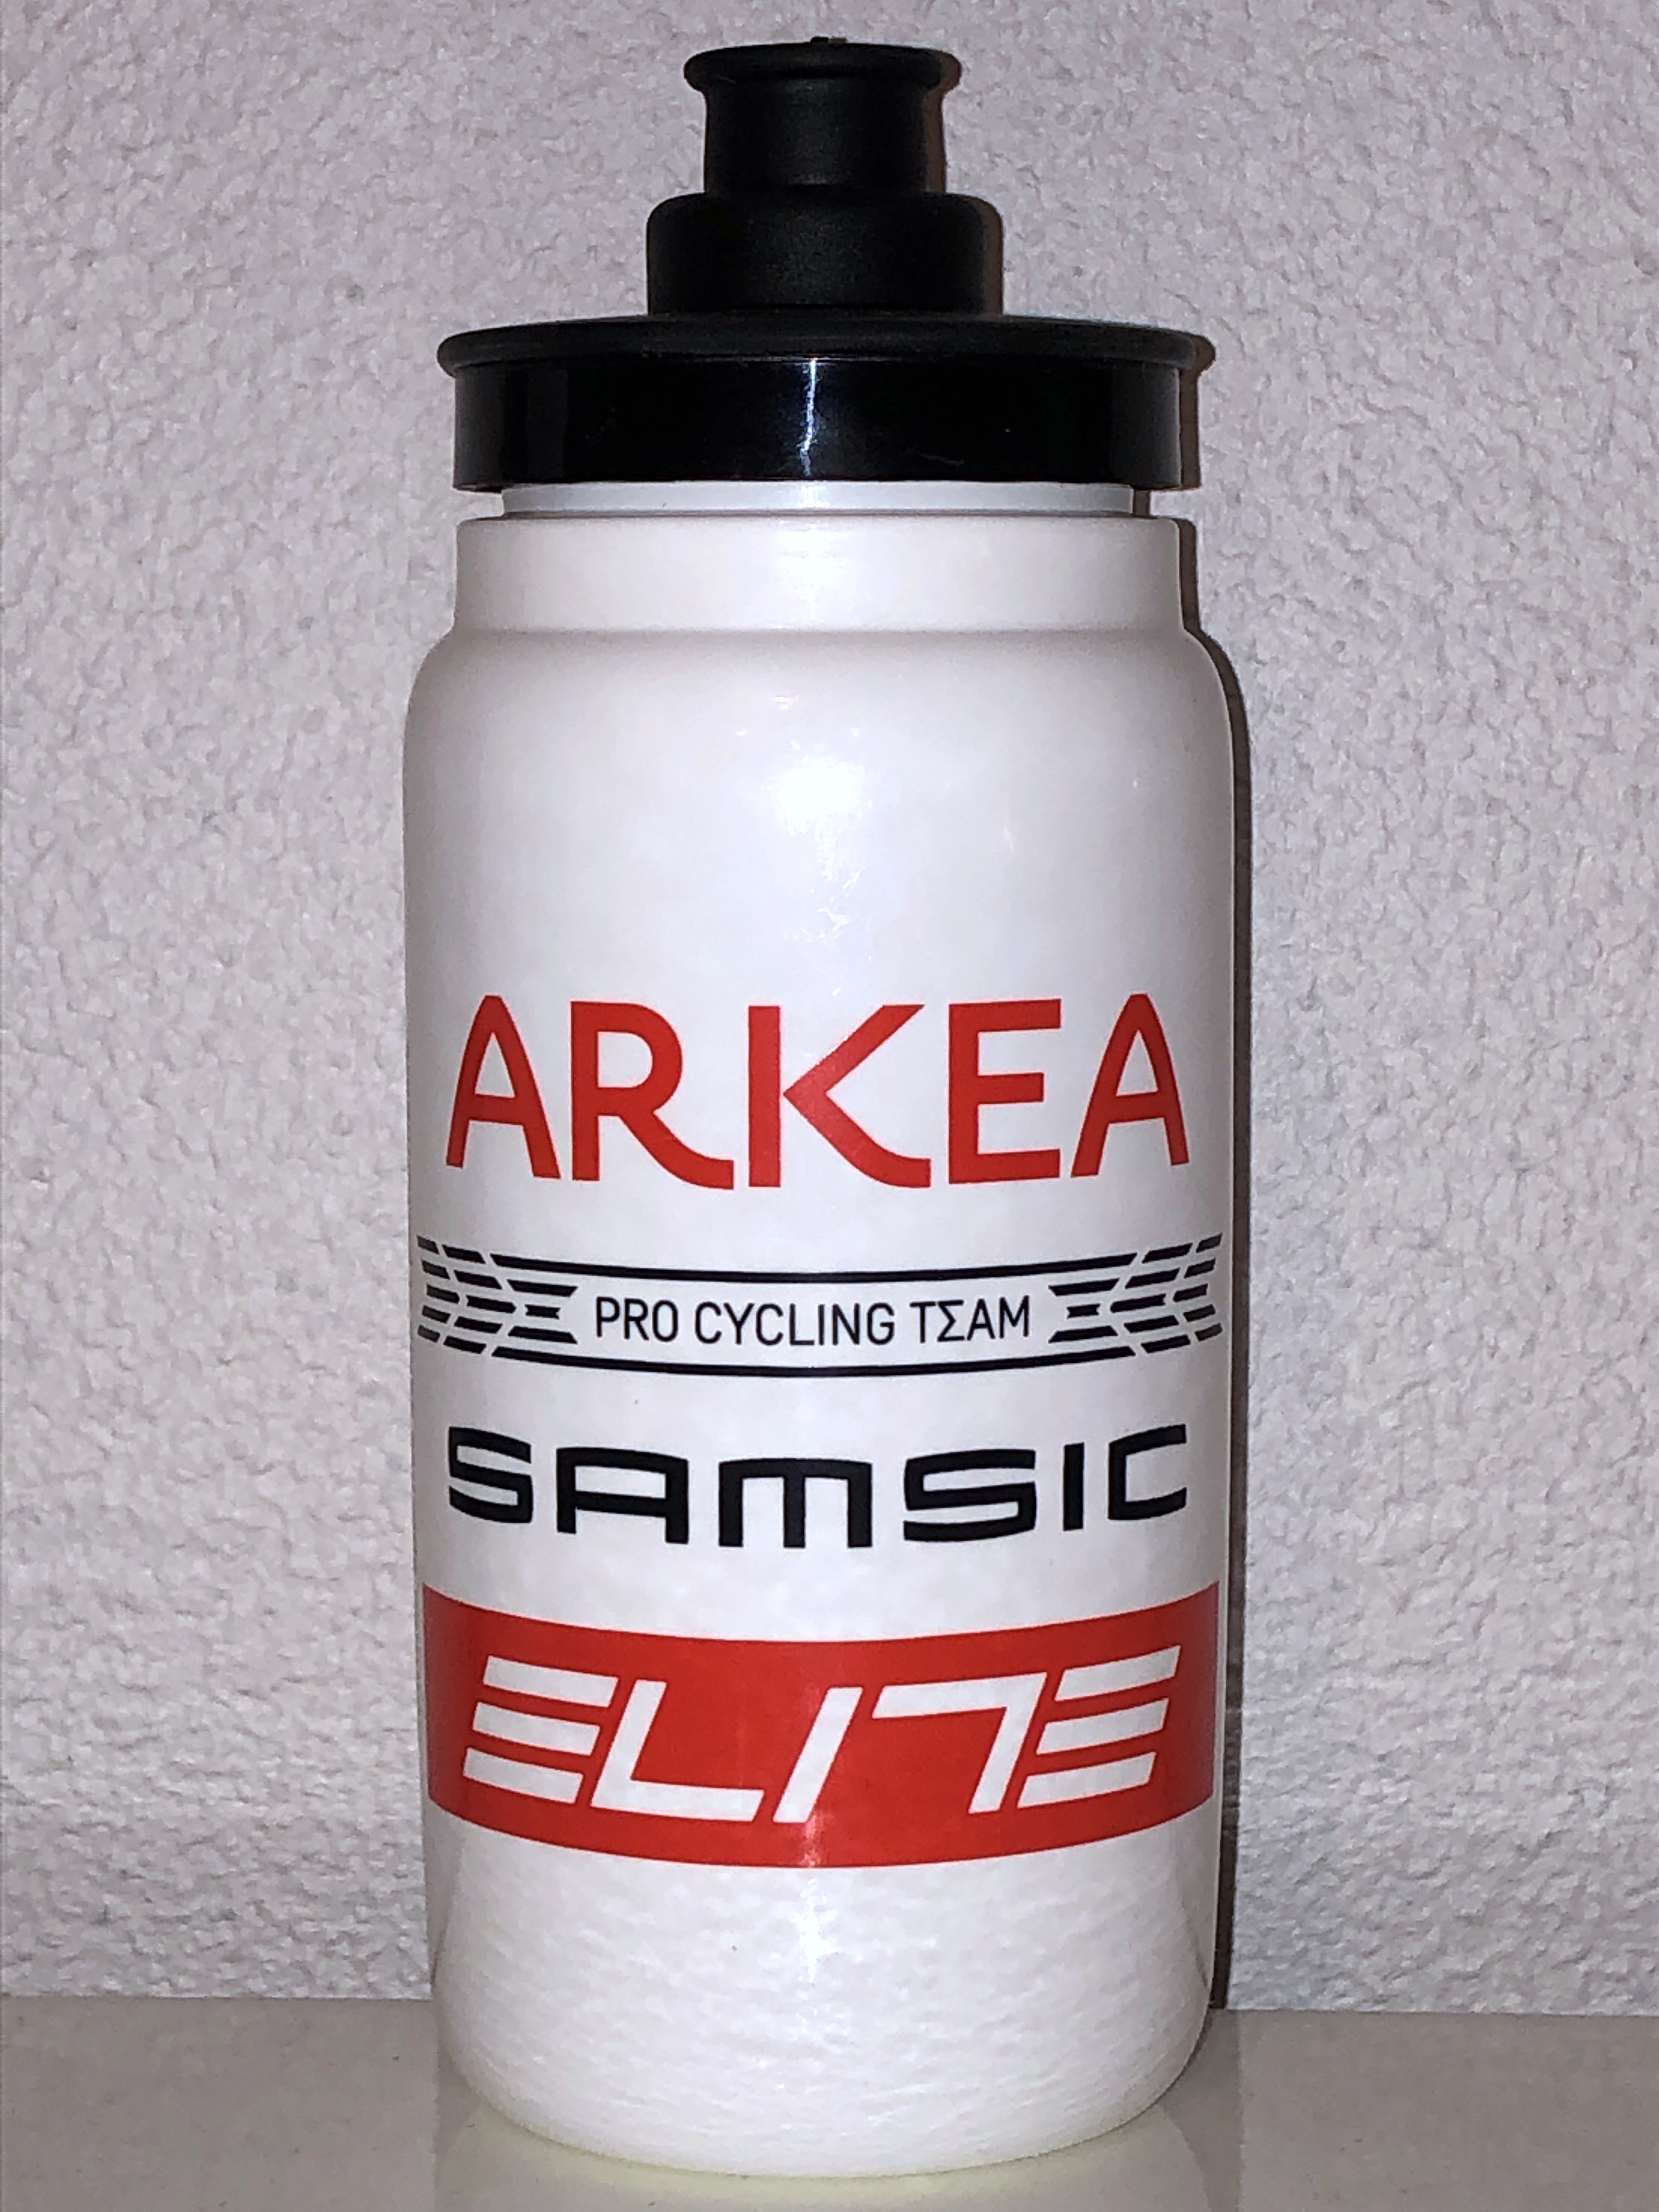 Elite Fly - Arkea Samsic Pro Cycling Team - 2020